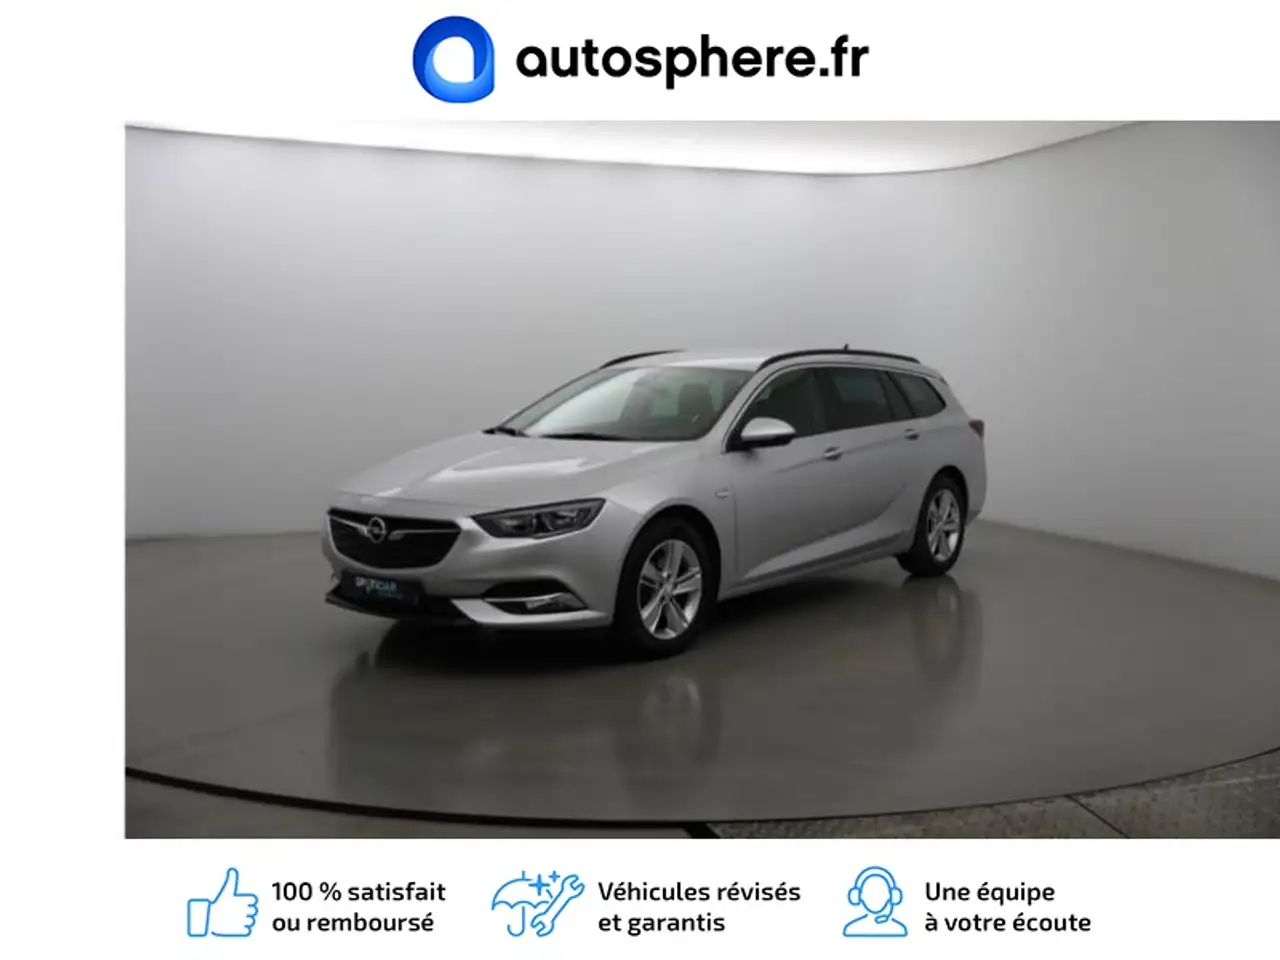 2019 Opel Insignia Insignia Manual Familiar